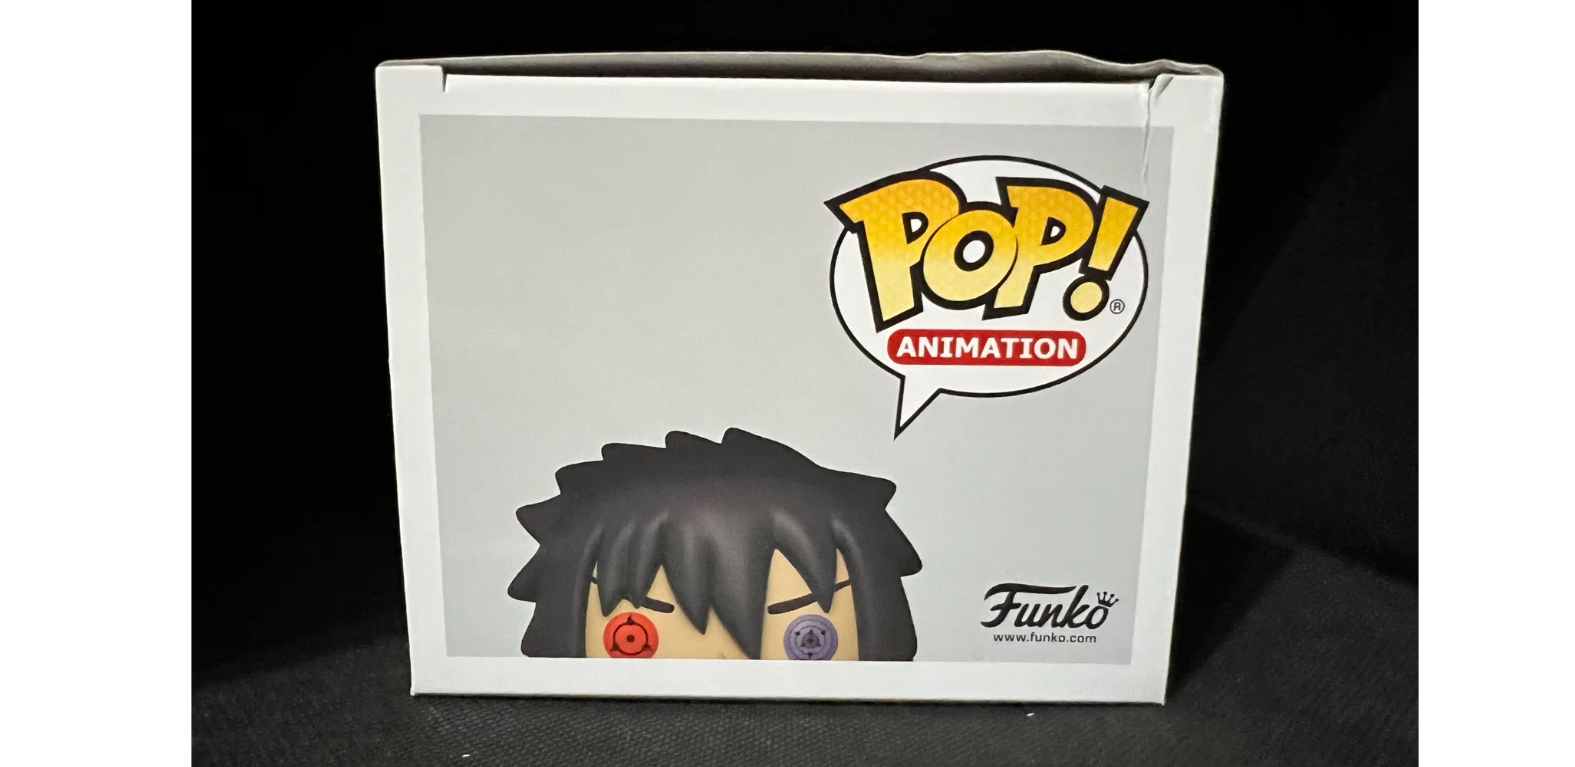 Naruto Sasuke Uchiha Rinnegan Funko Pop! Vinyl Figure #1023 - AAA Anime  Exclusive